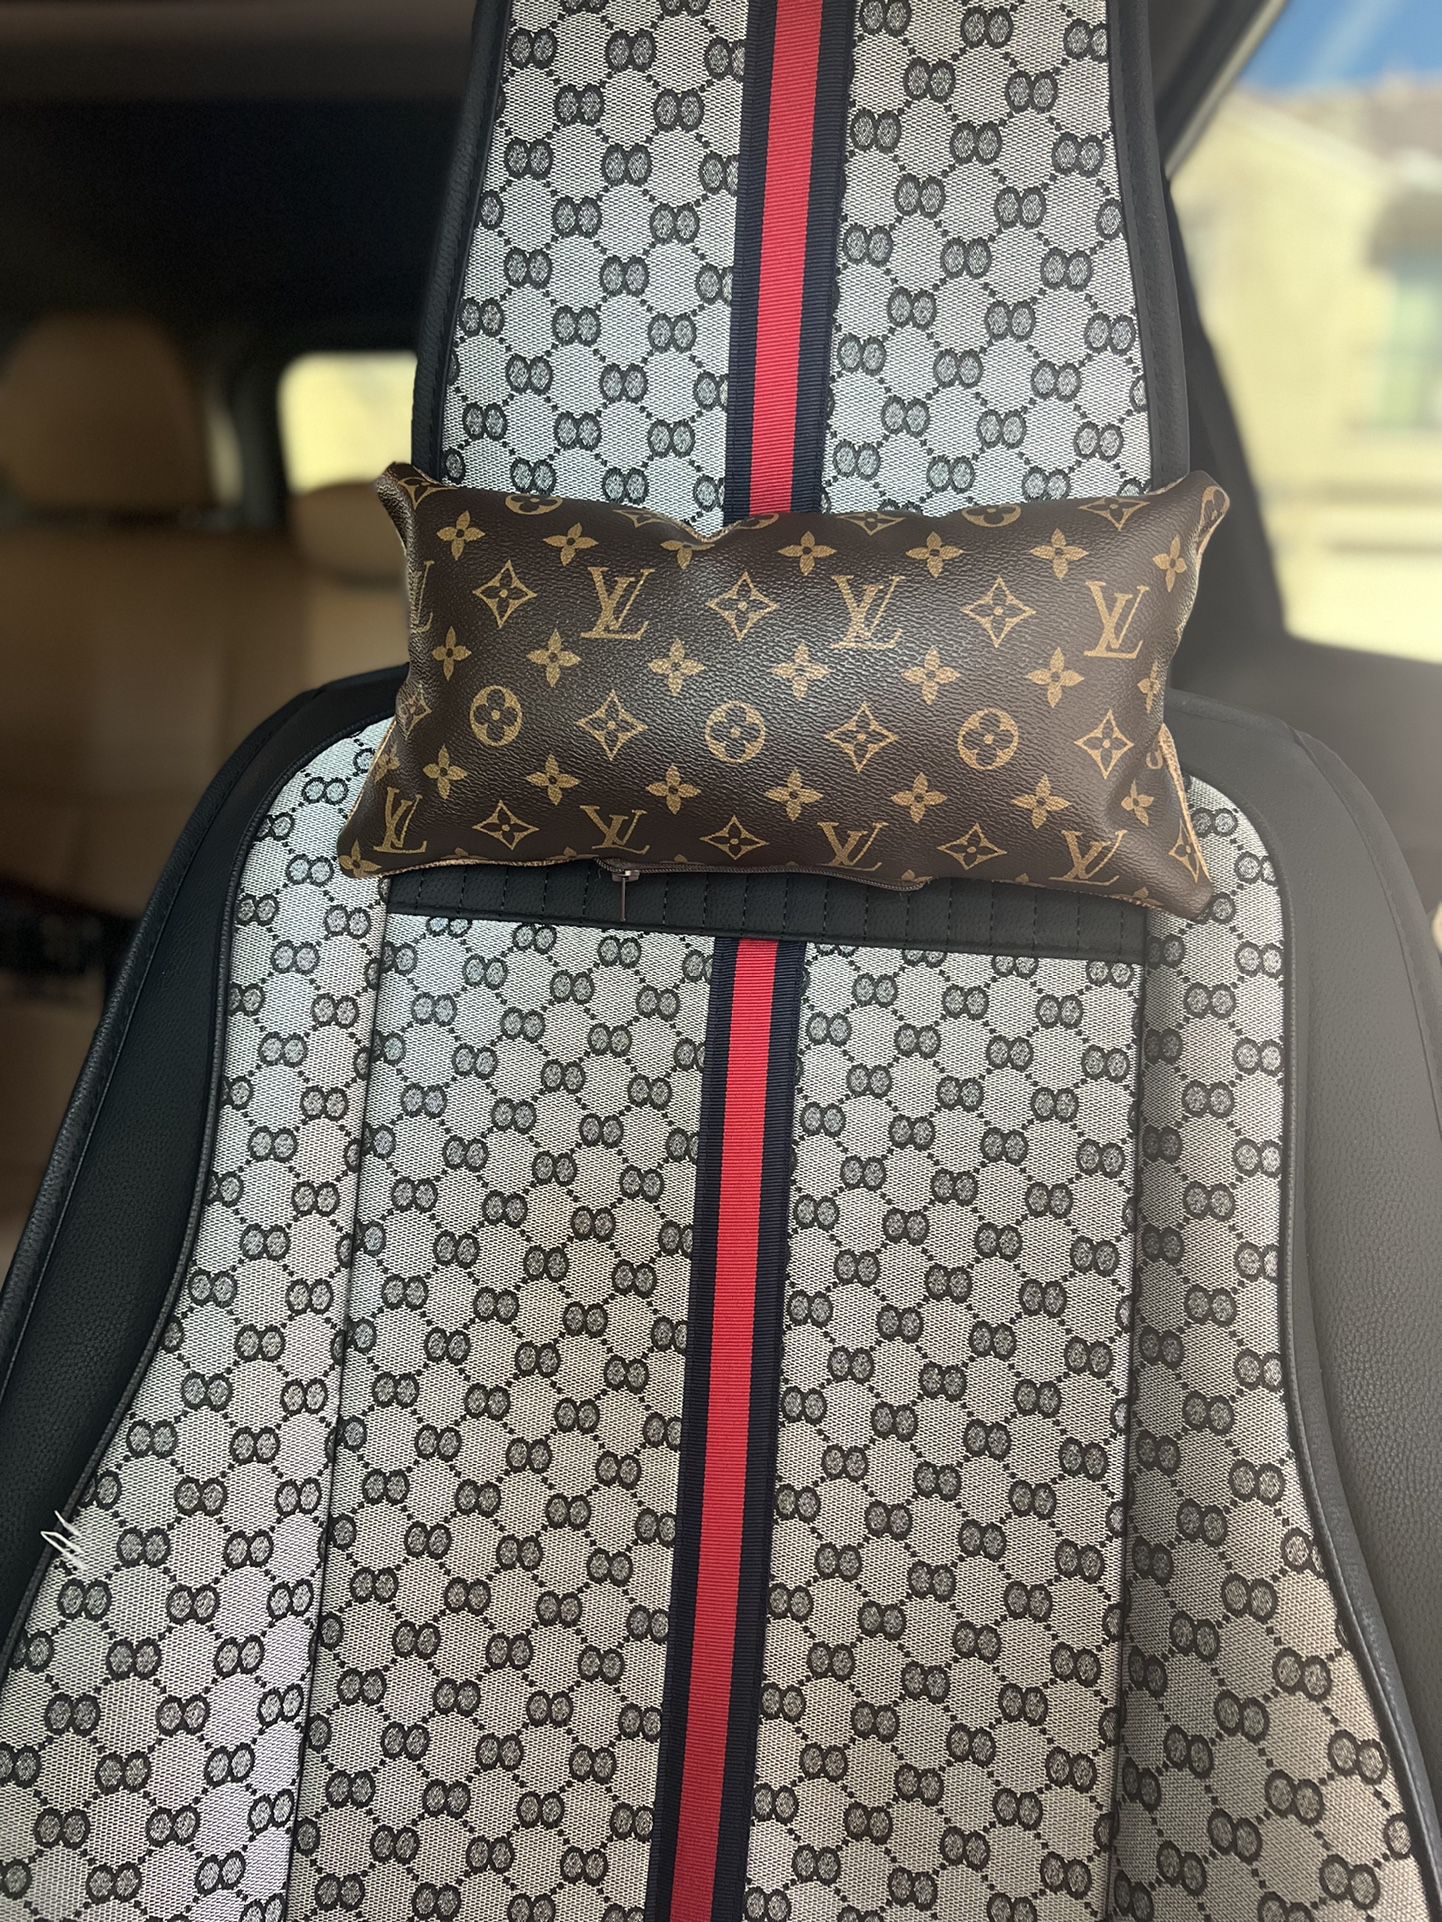 Lv Car Headrest Pillow for Sale in Las Vegas, NV - OfferUp